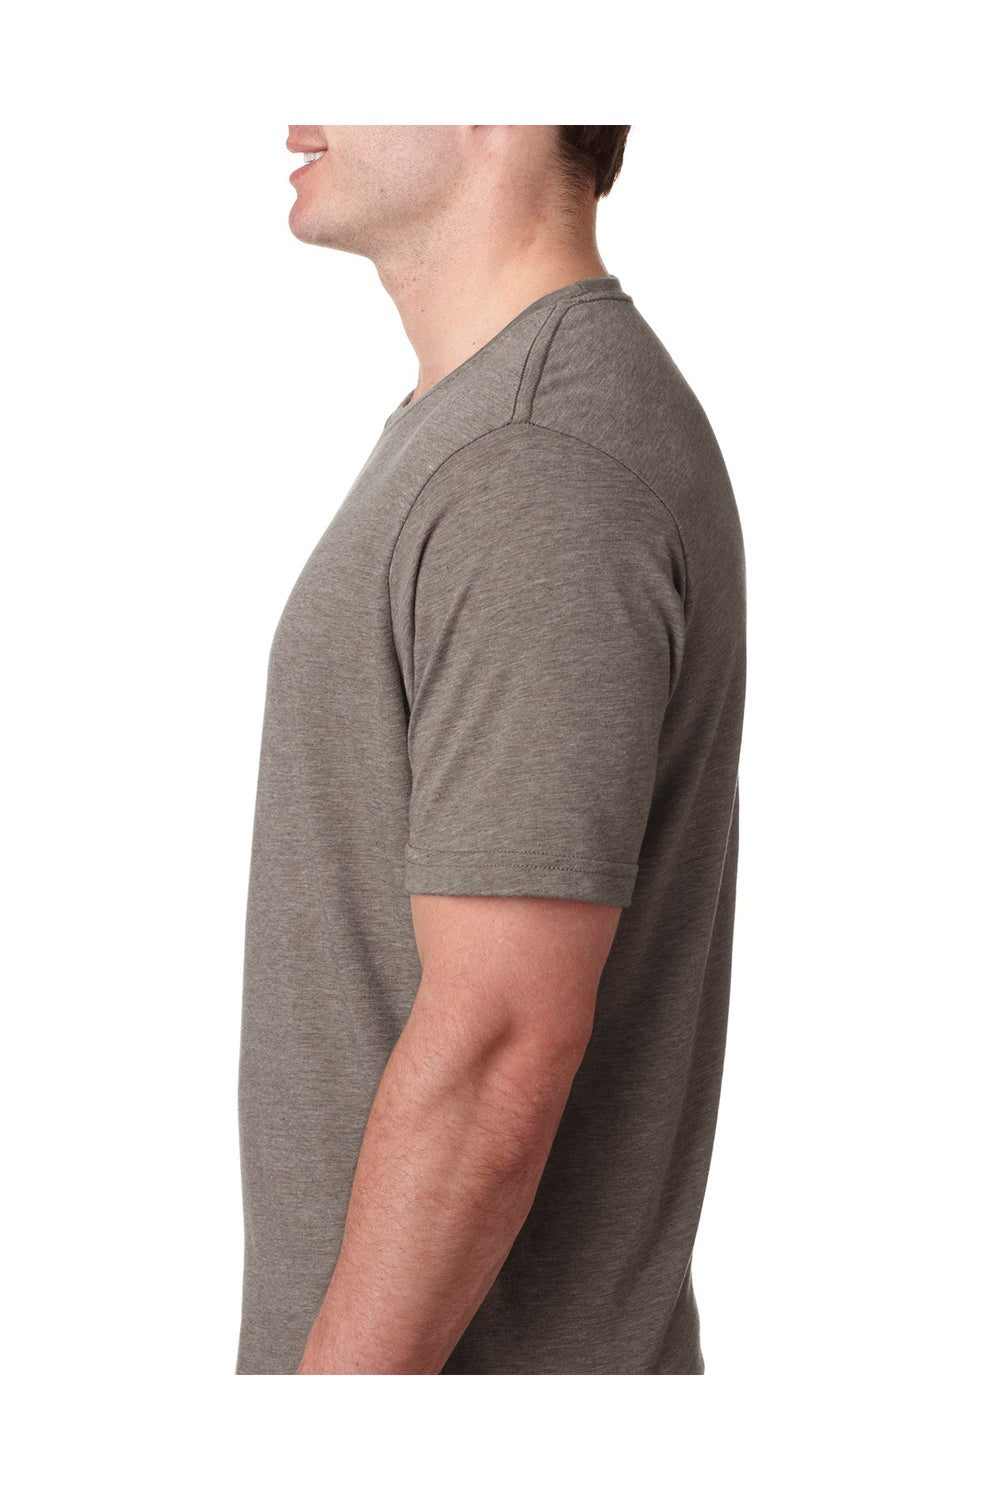 Next Level 6200 Mens Jersey Short Sleeve Crewneck T-Shirt Ash Grey Side